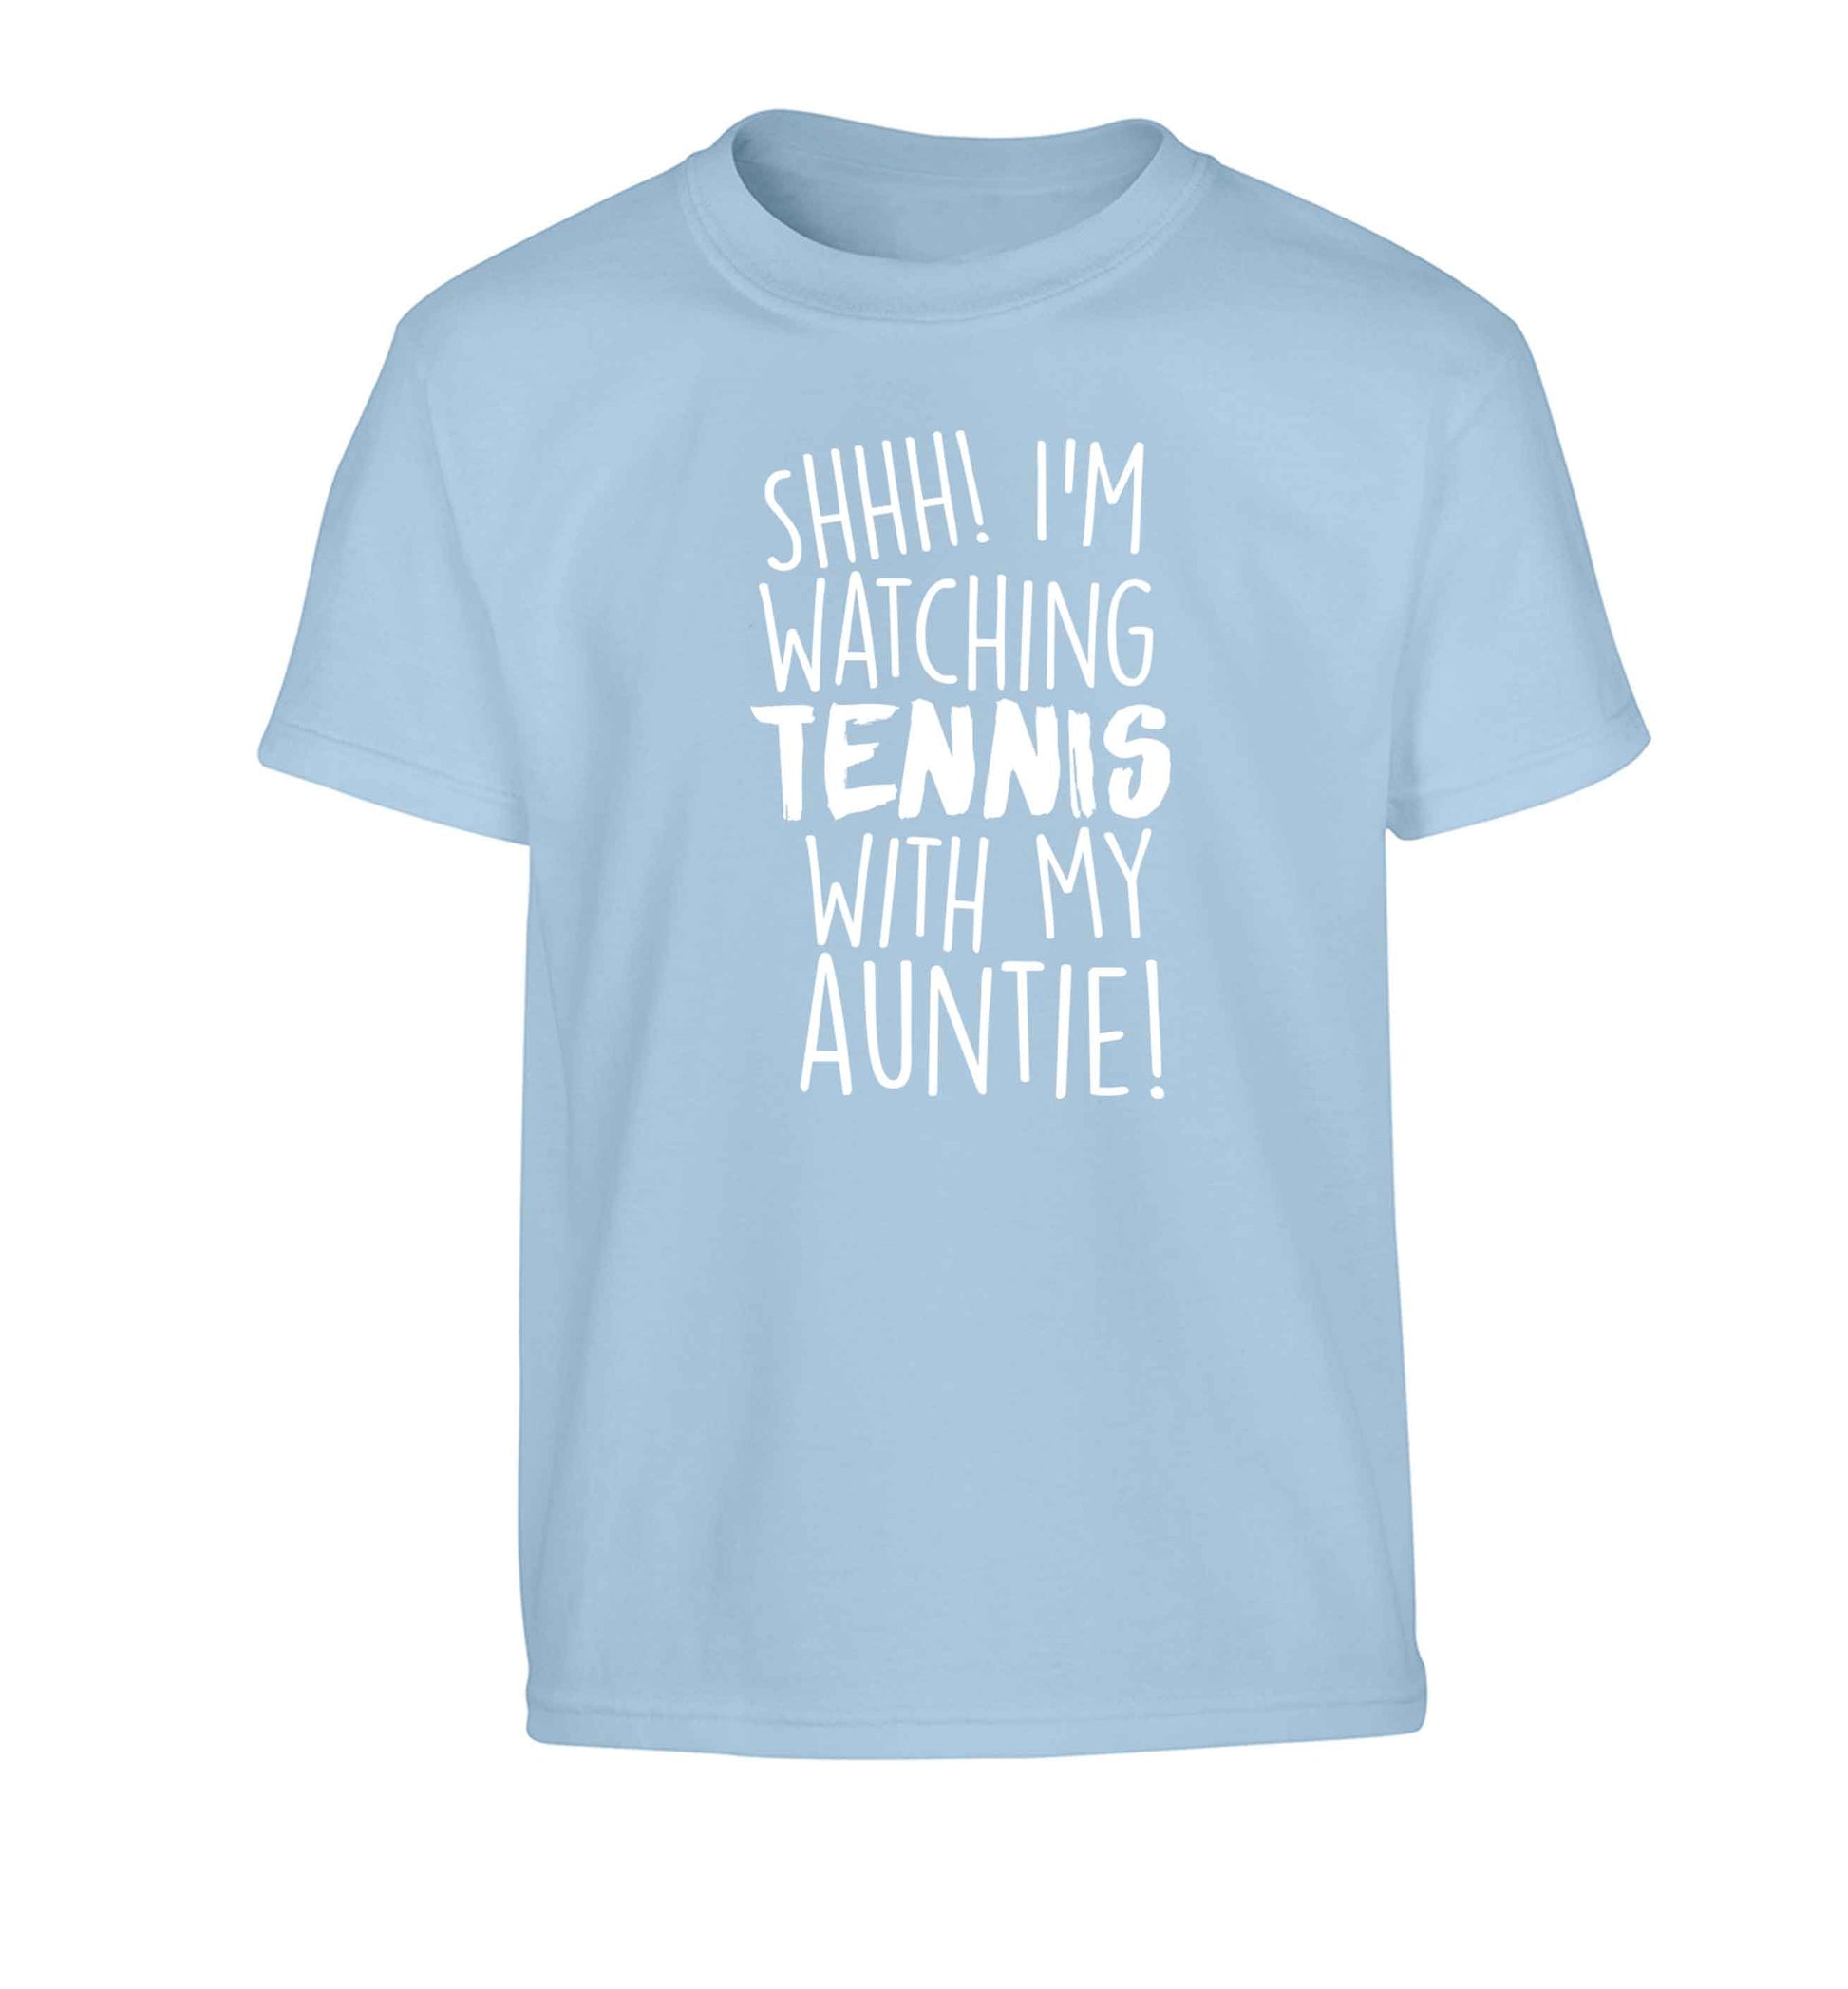 Shh! I'm watching tennis with my auntie! Children's light blue Tshirt 12-13 Years